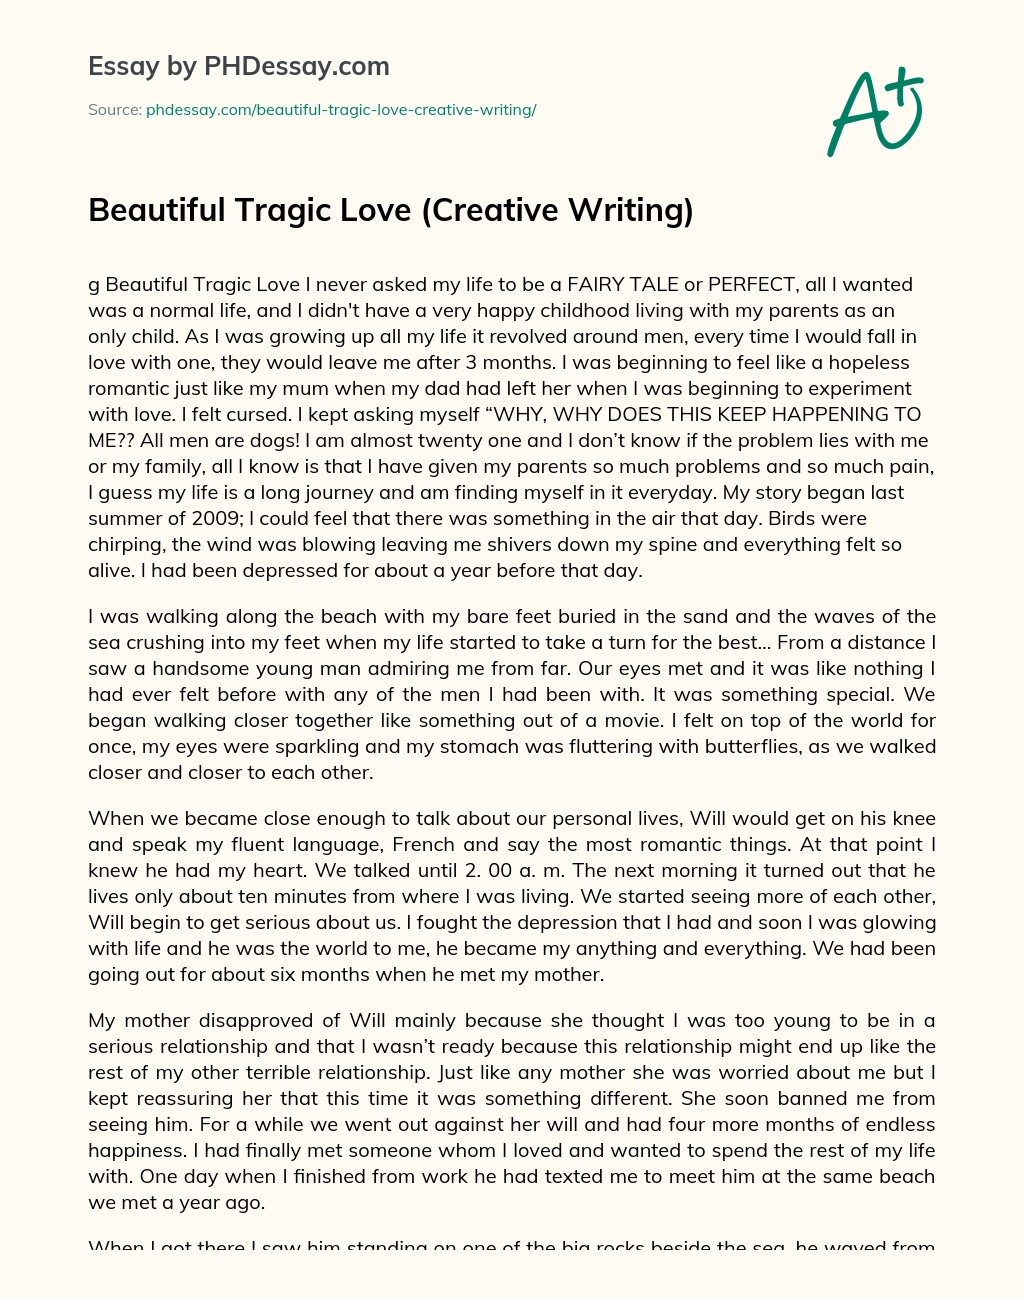 sad love story essay